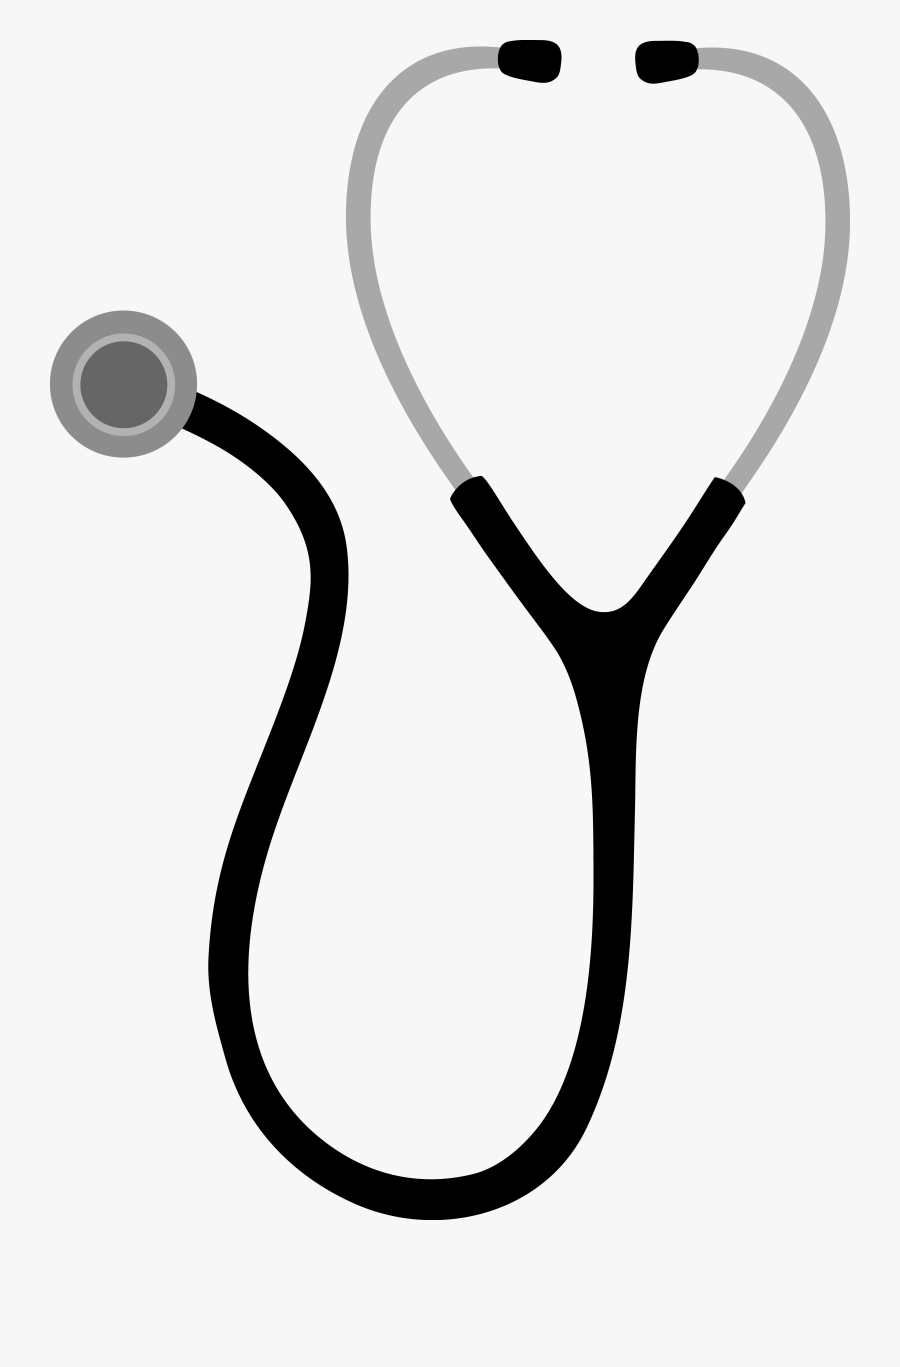 Cartoon Stethoscope - Transparent Background Stethoscope Clipart, Transparent Clipart